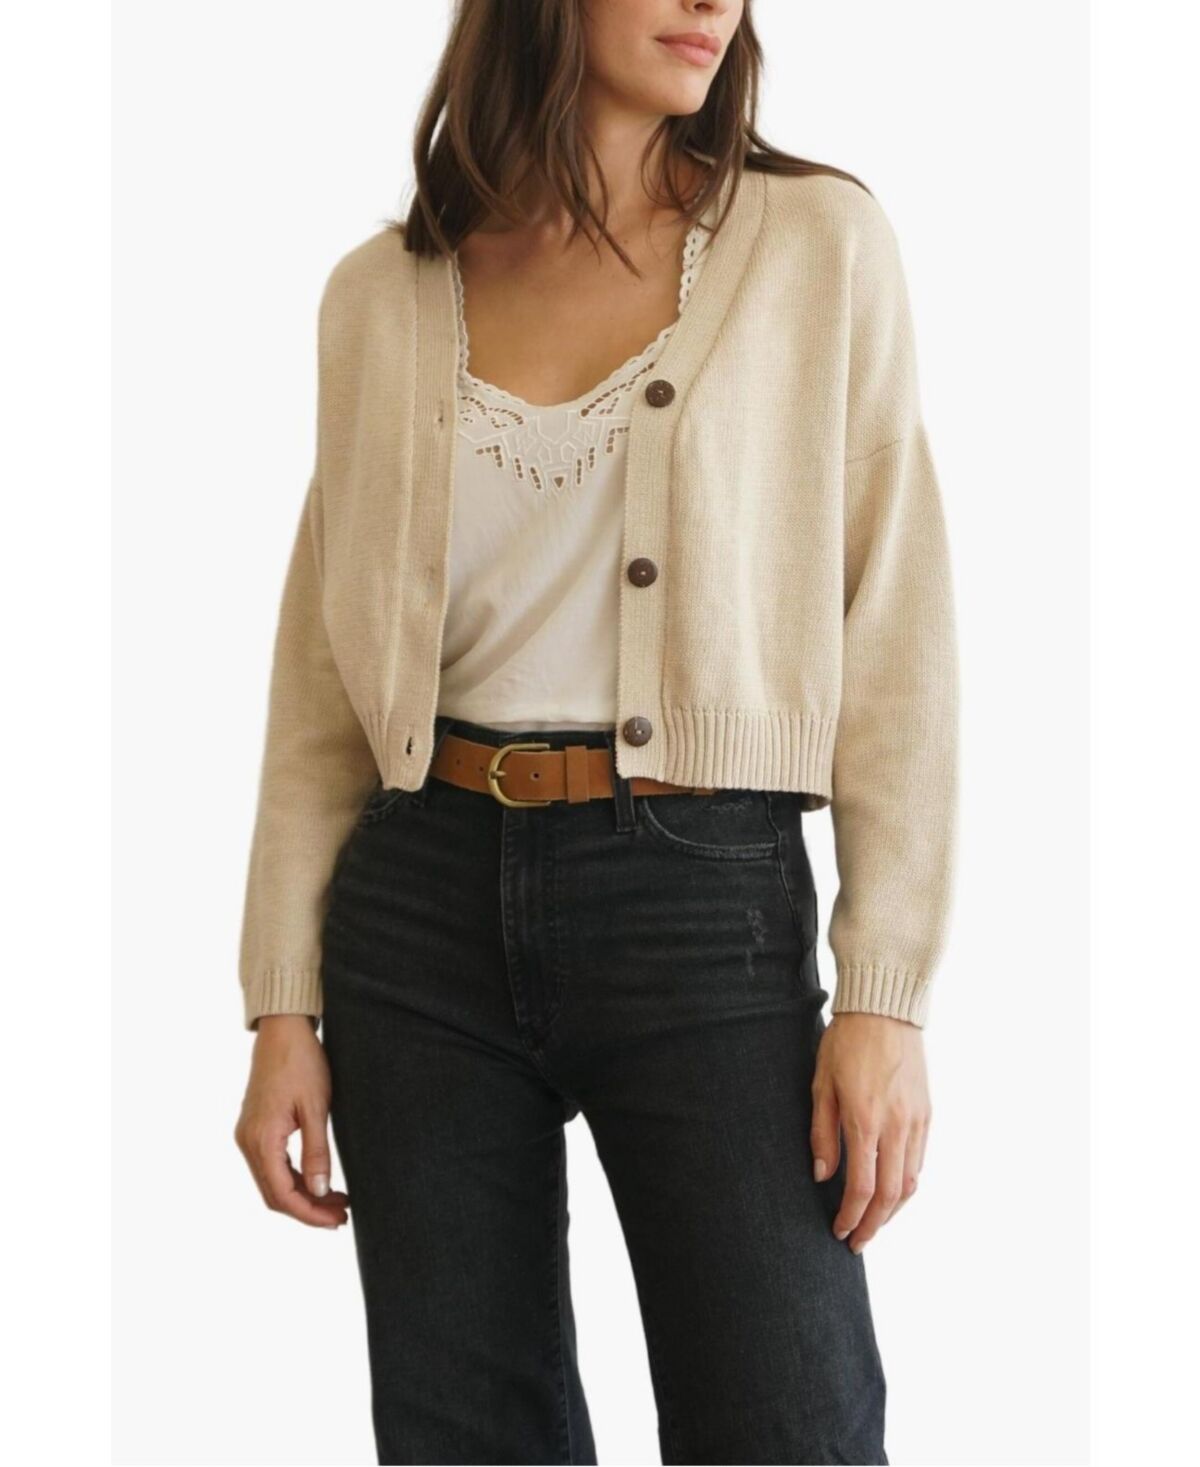 Paneros Clothing Women's Cotton Diana Crop Cardigan Sweater - Sand